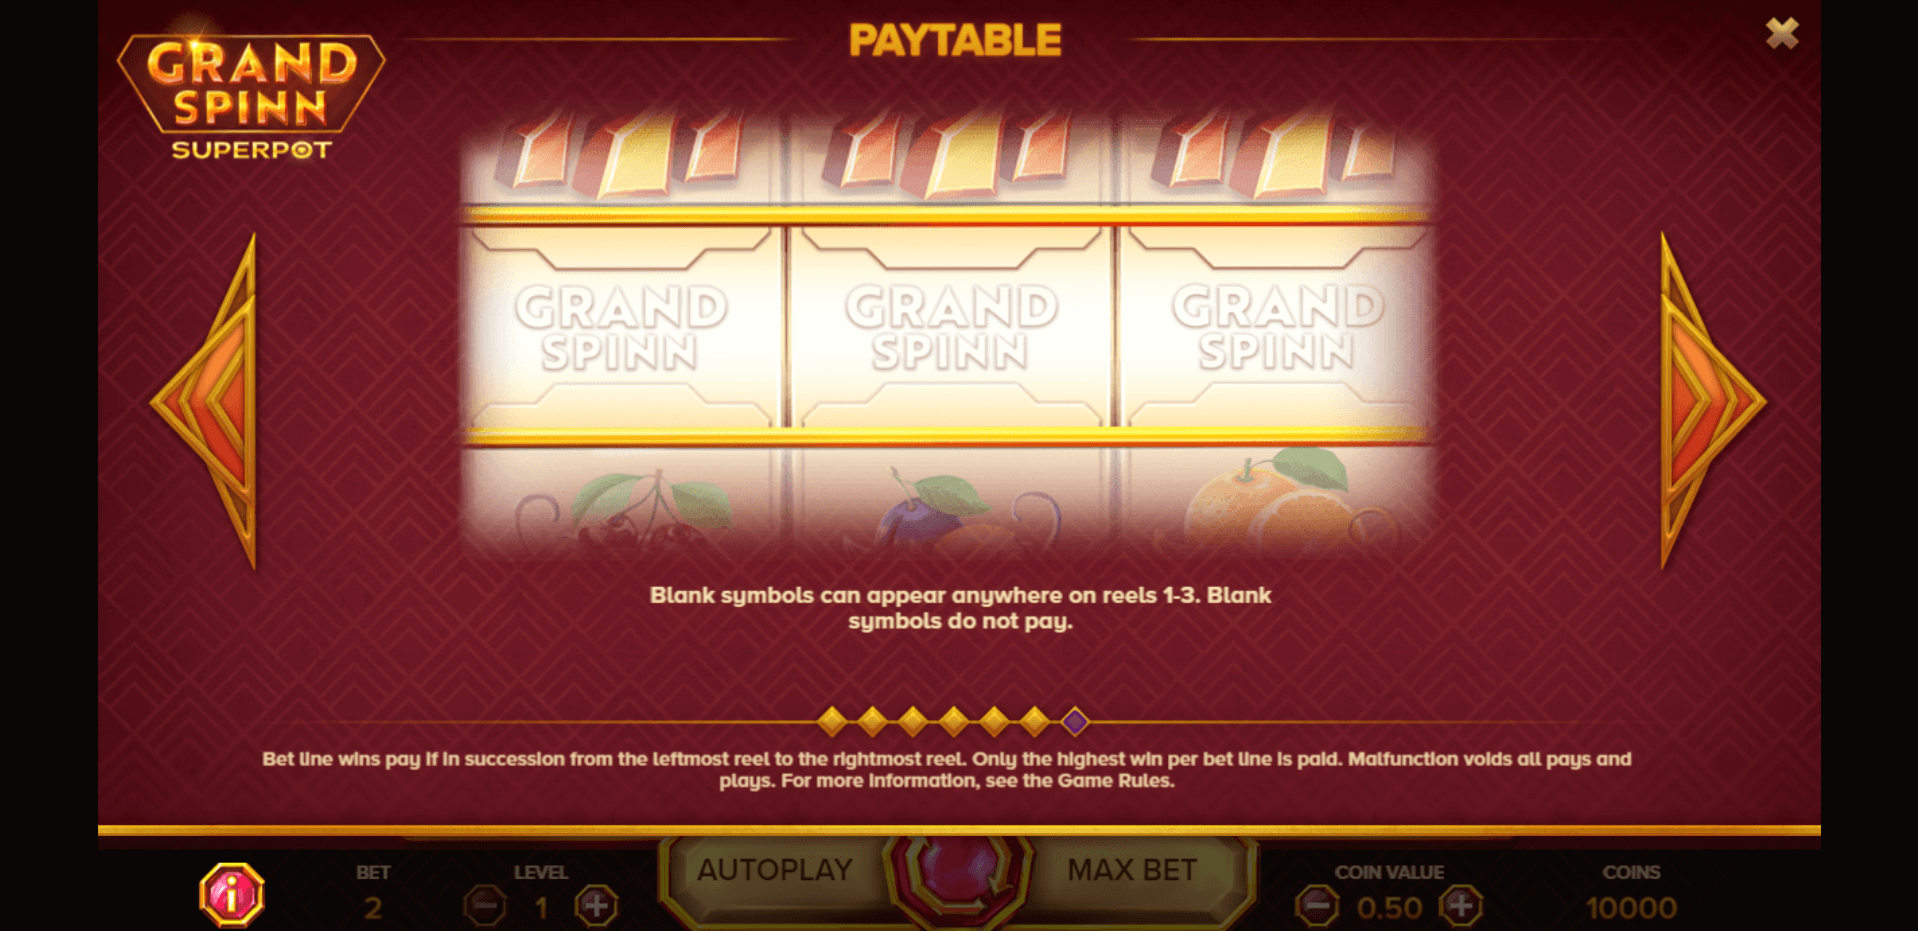 grand spinn superpot slot machine detail image 6